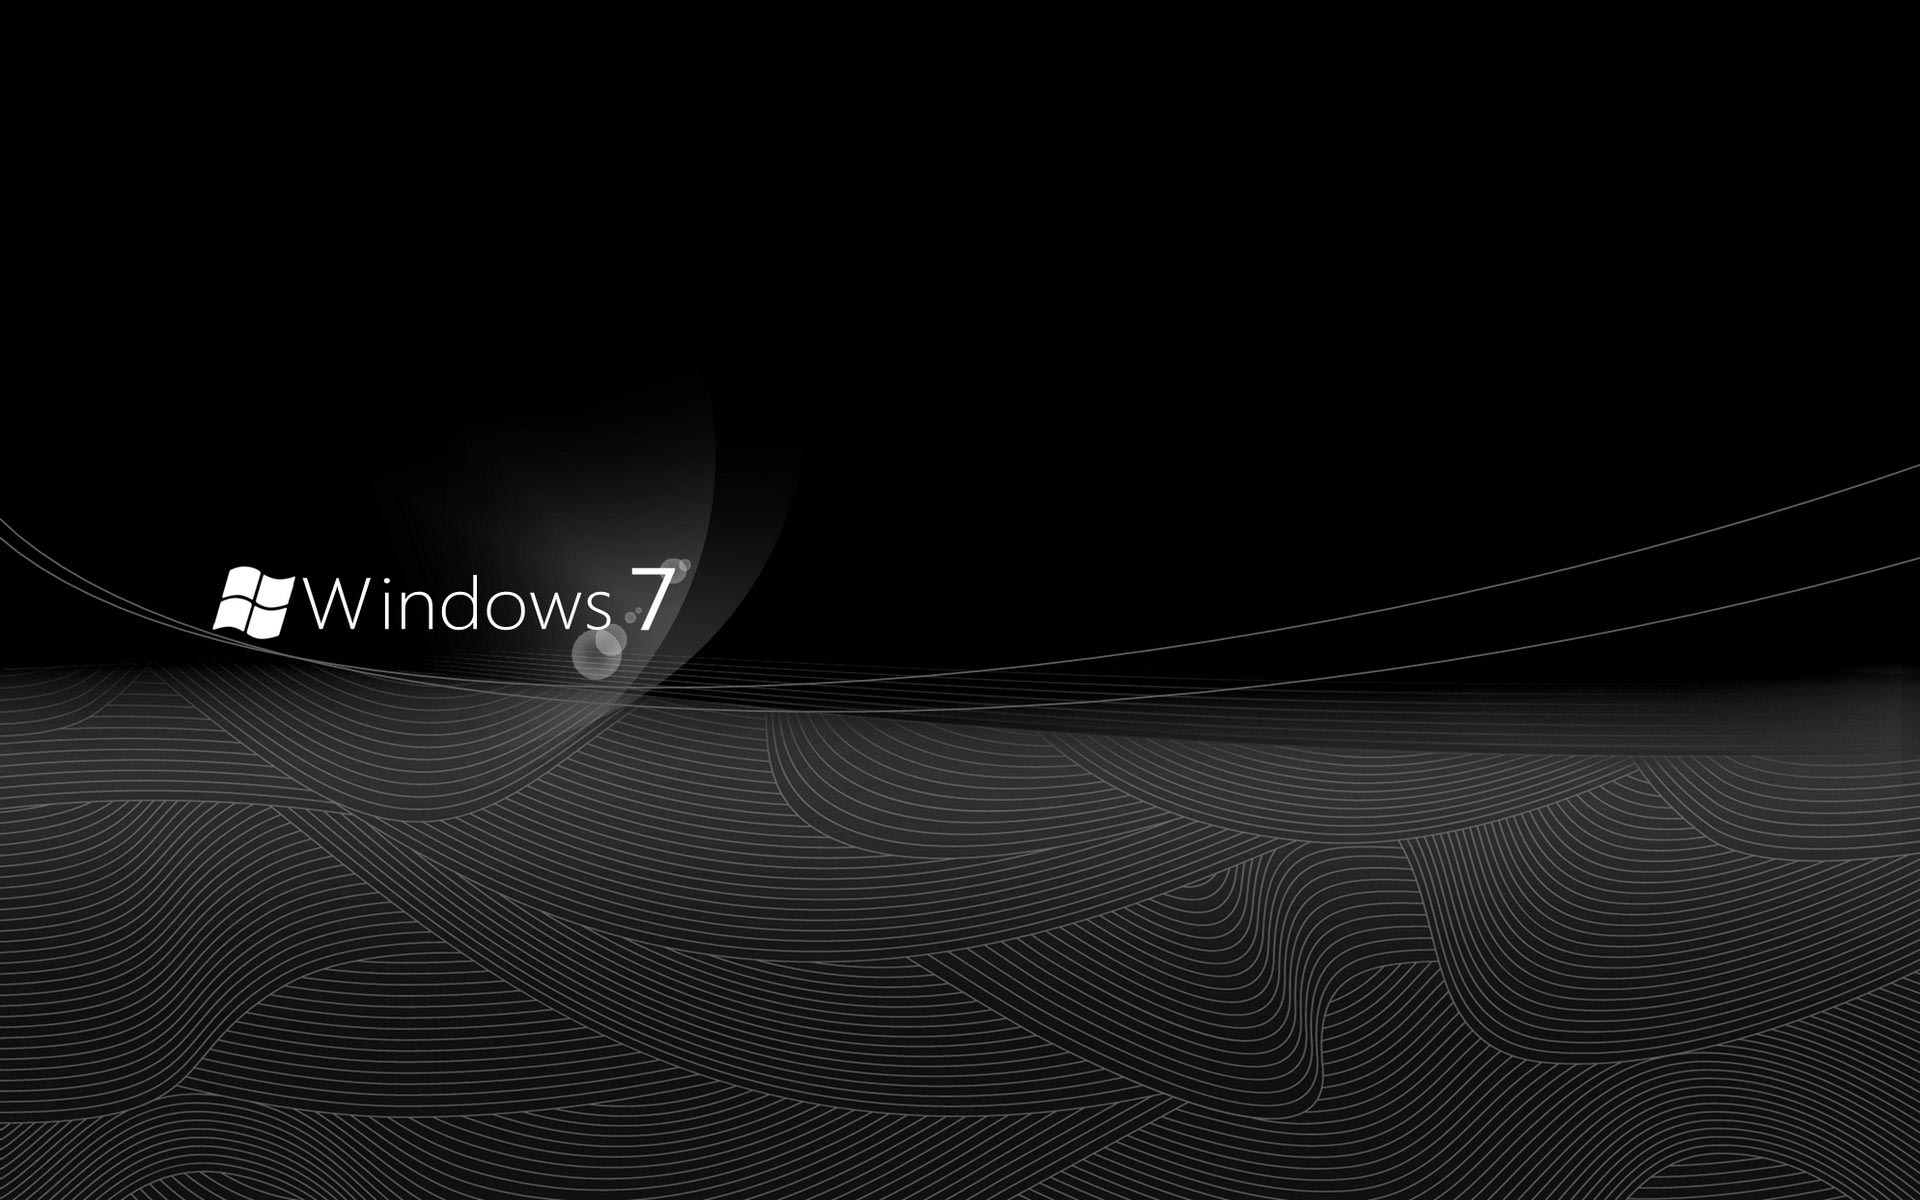  Windows 7 Elegant black Desktop Wallpaper and make this wallpaper for